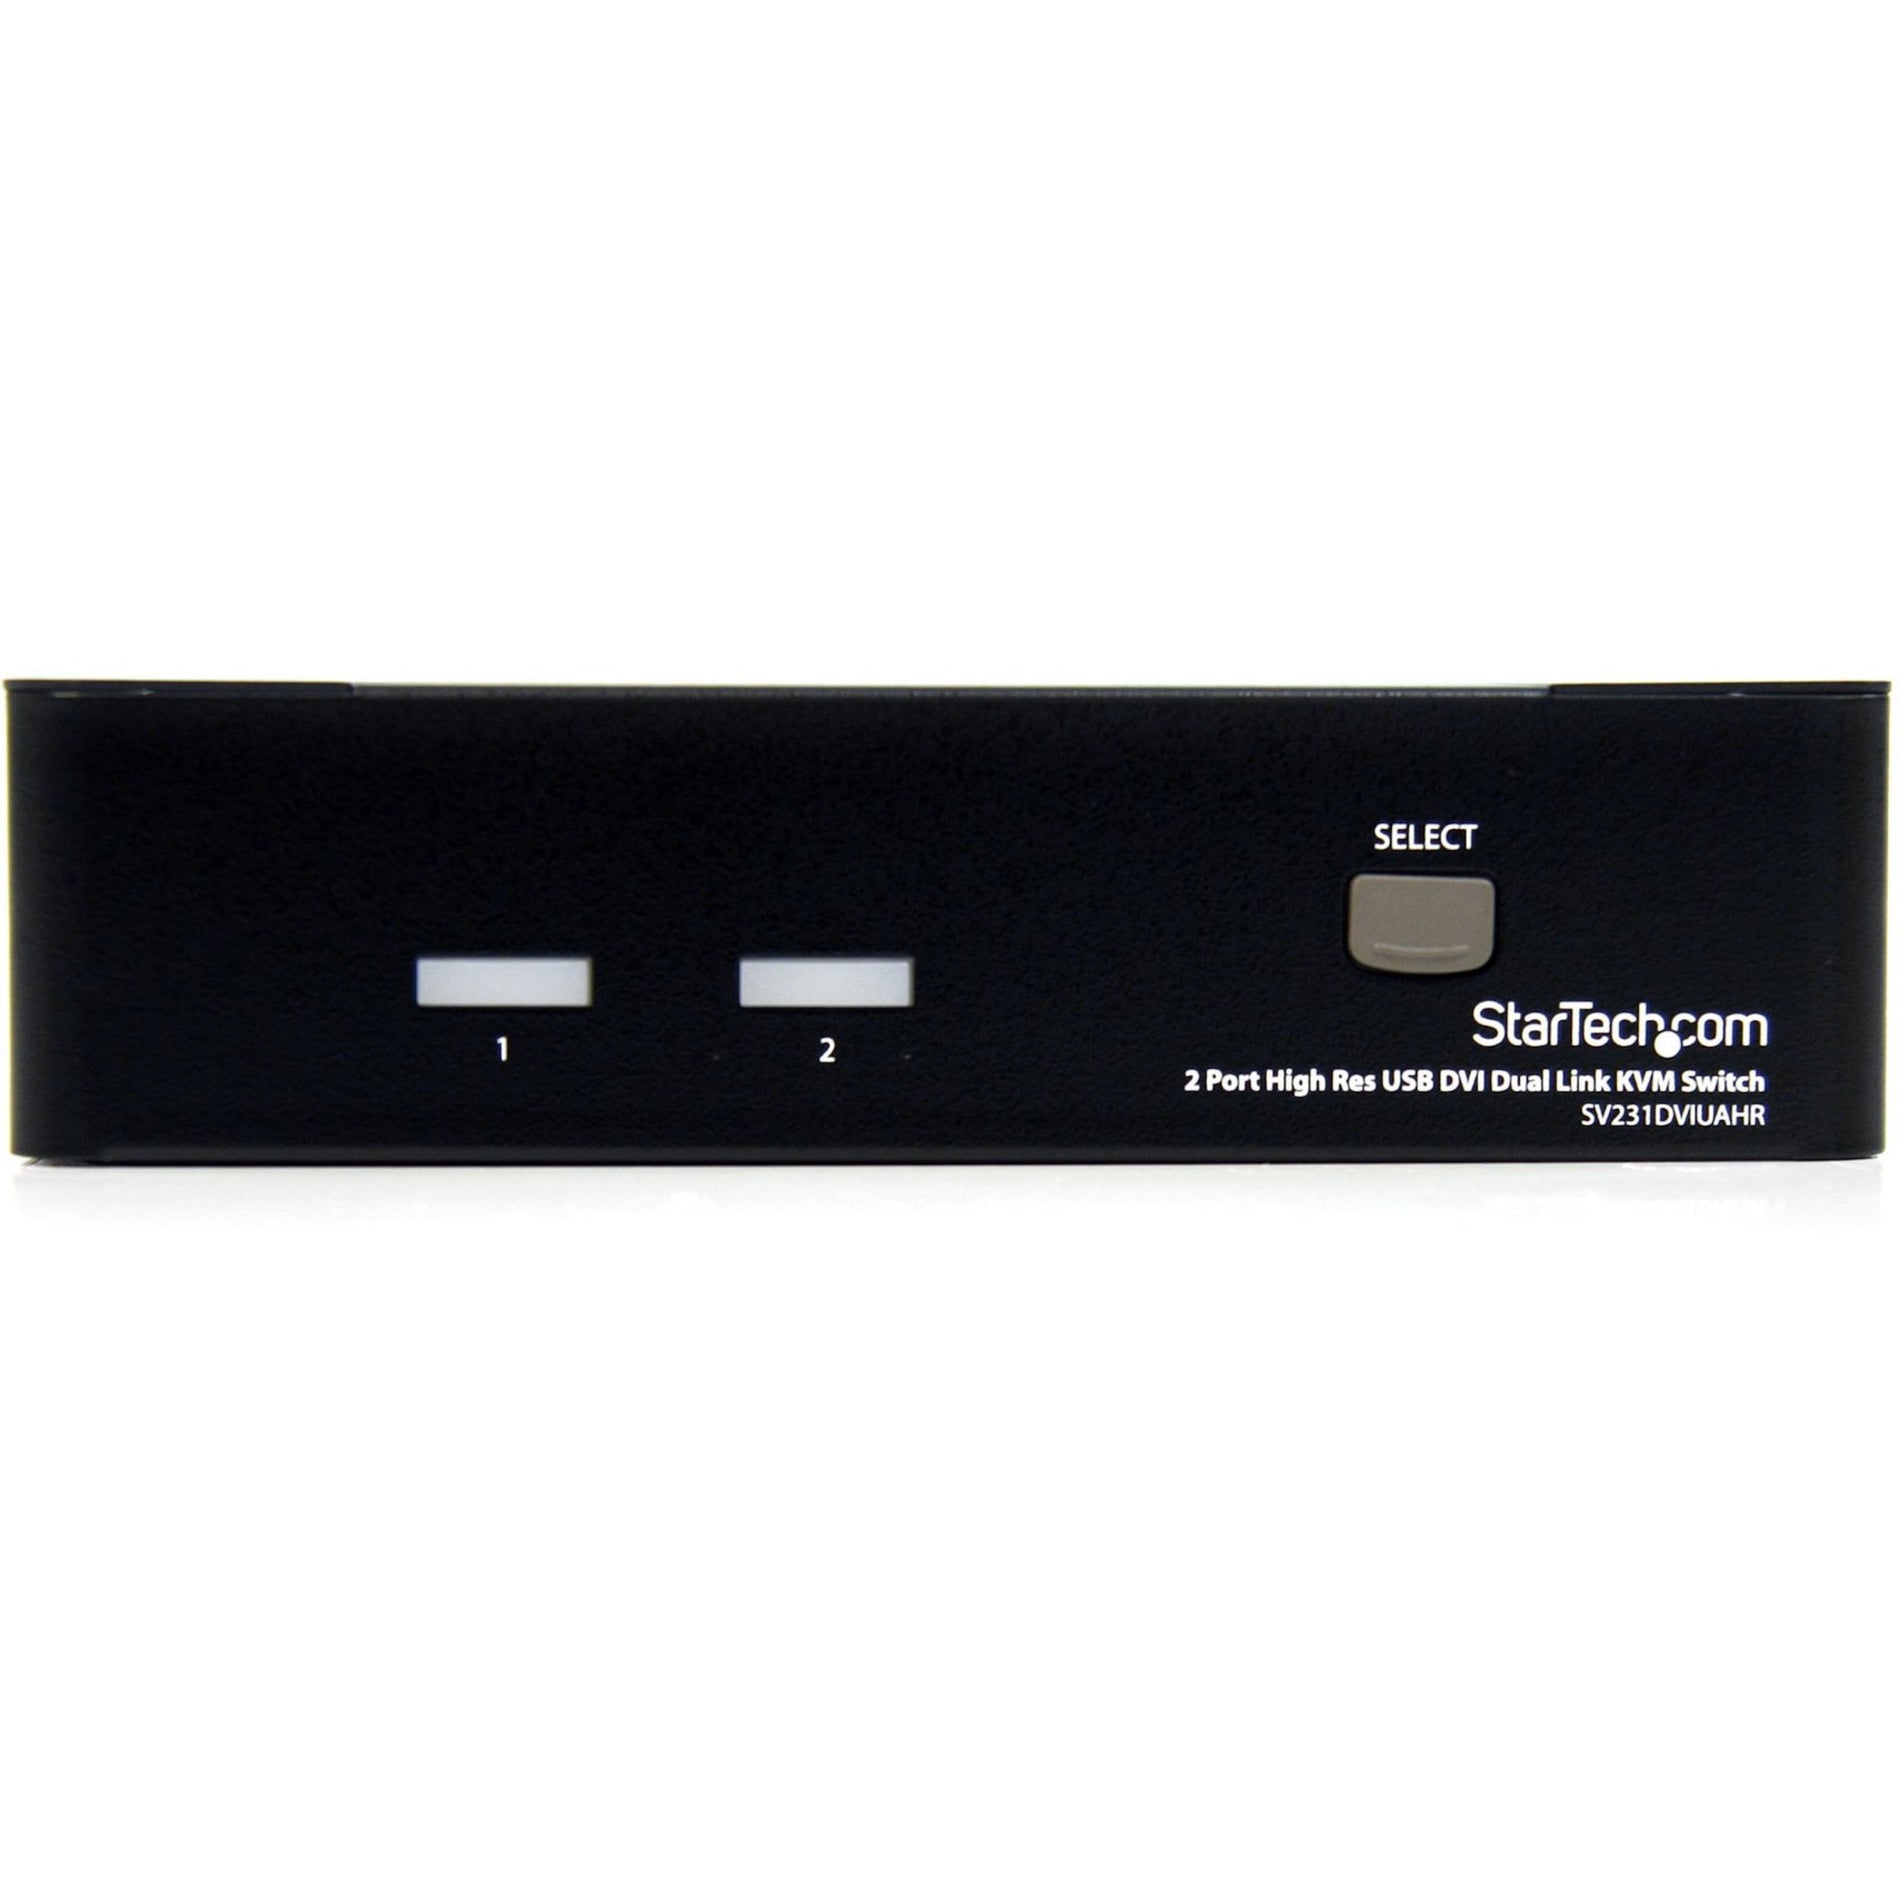 StarTech.com SV231DVIUAHR 2 Port High Resolution USB DVI Dual Link KVM Switch with Audio, WQUXGA, 3840 x 2400, TAA Compliant [Discontinued]